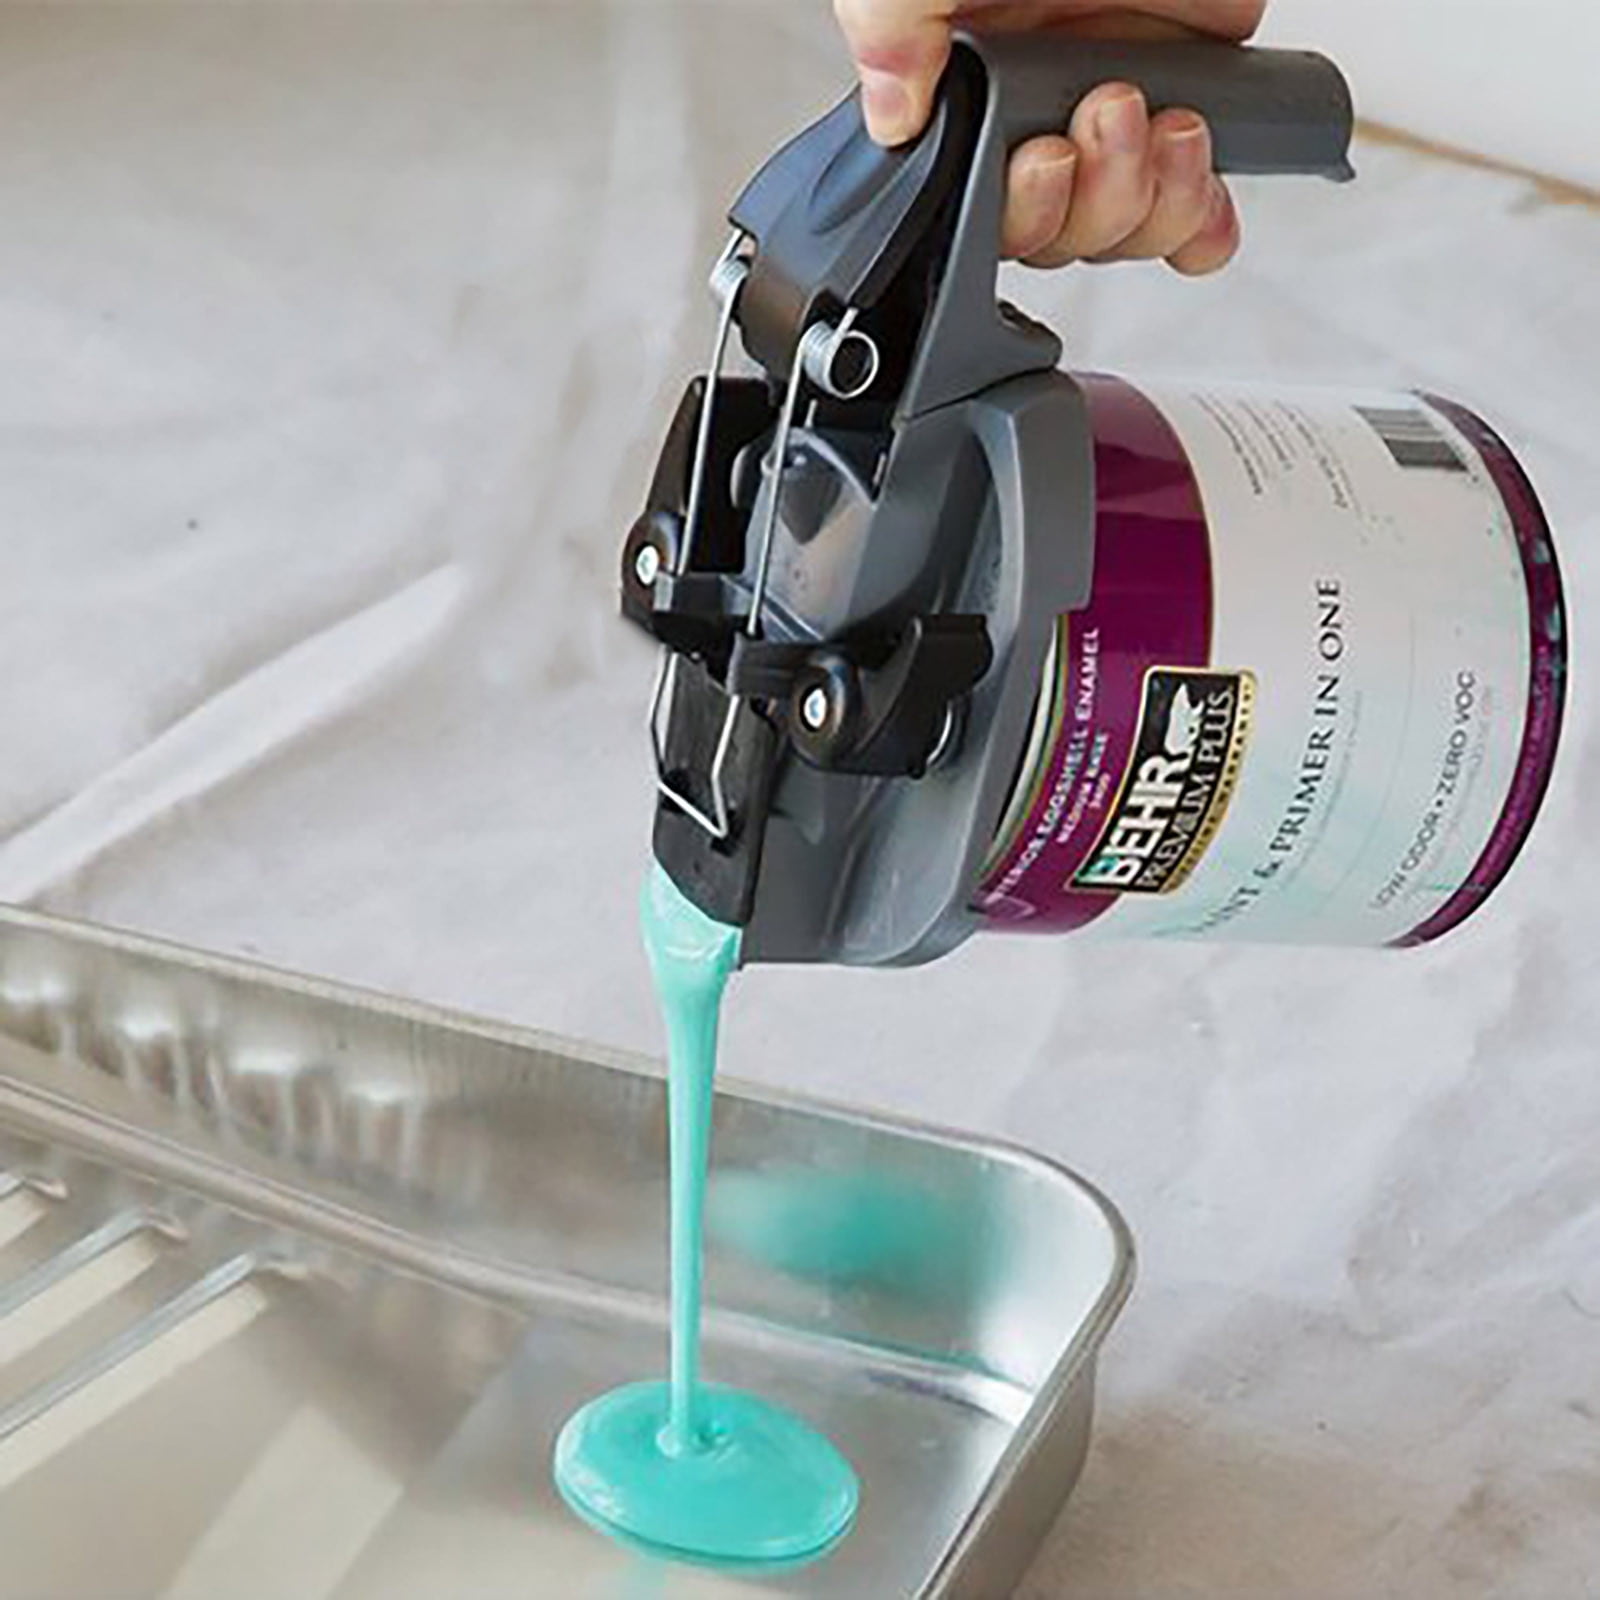 Tiitstoy Mixing Mate Paint Lid Gallon Size Paint Can Pour Spout